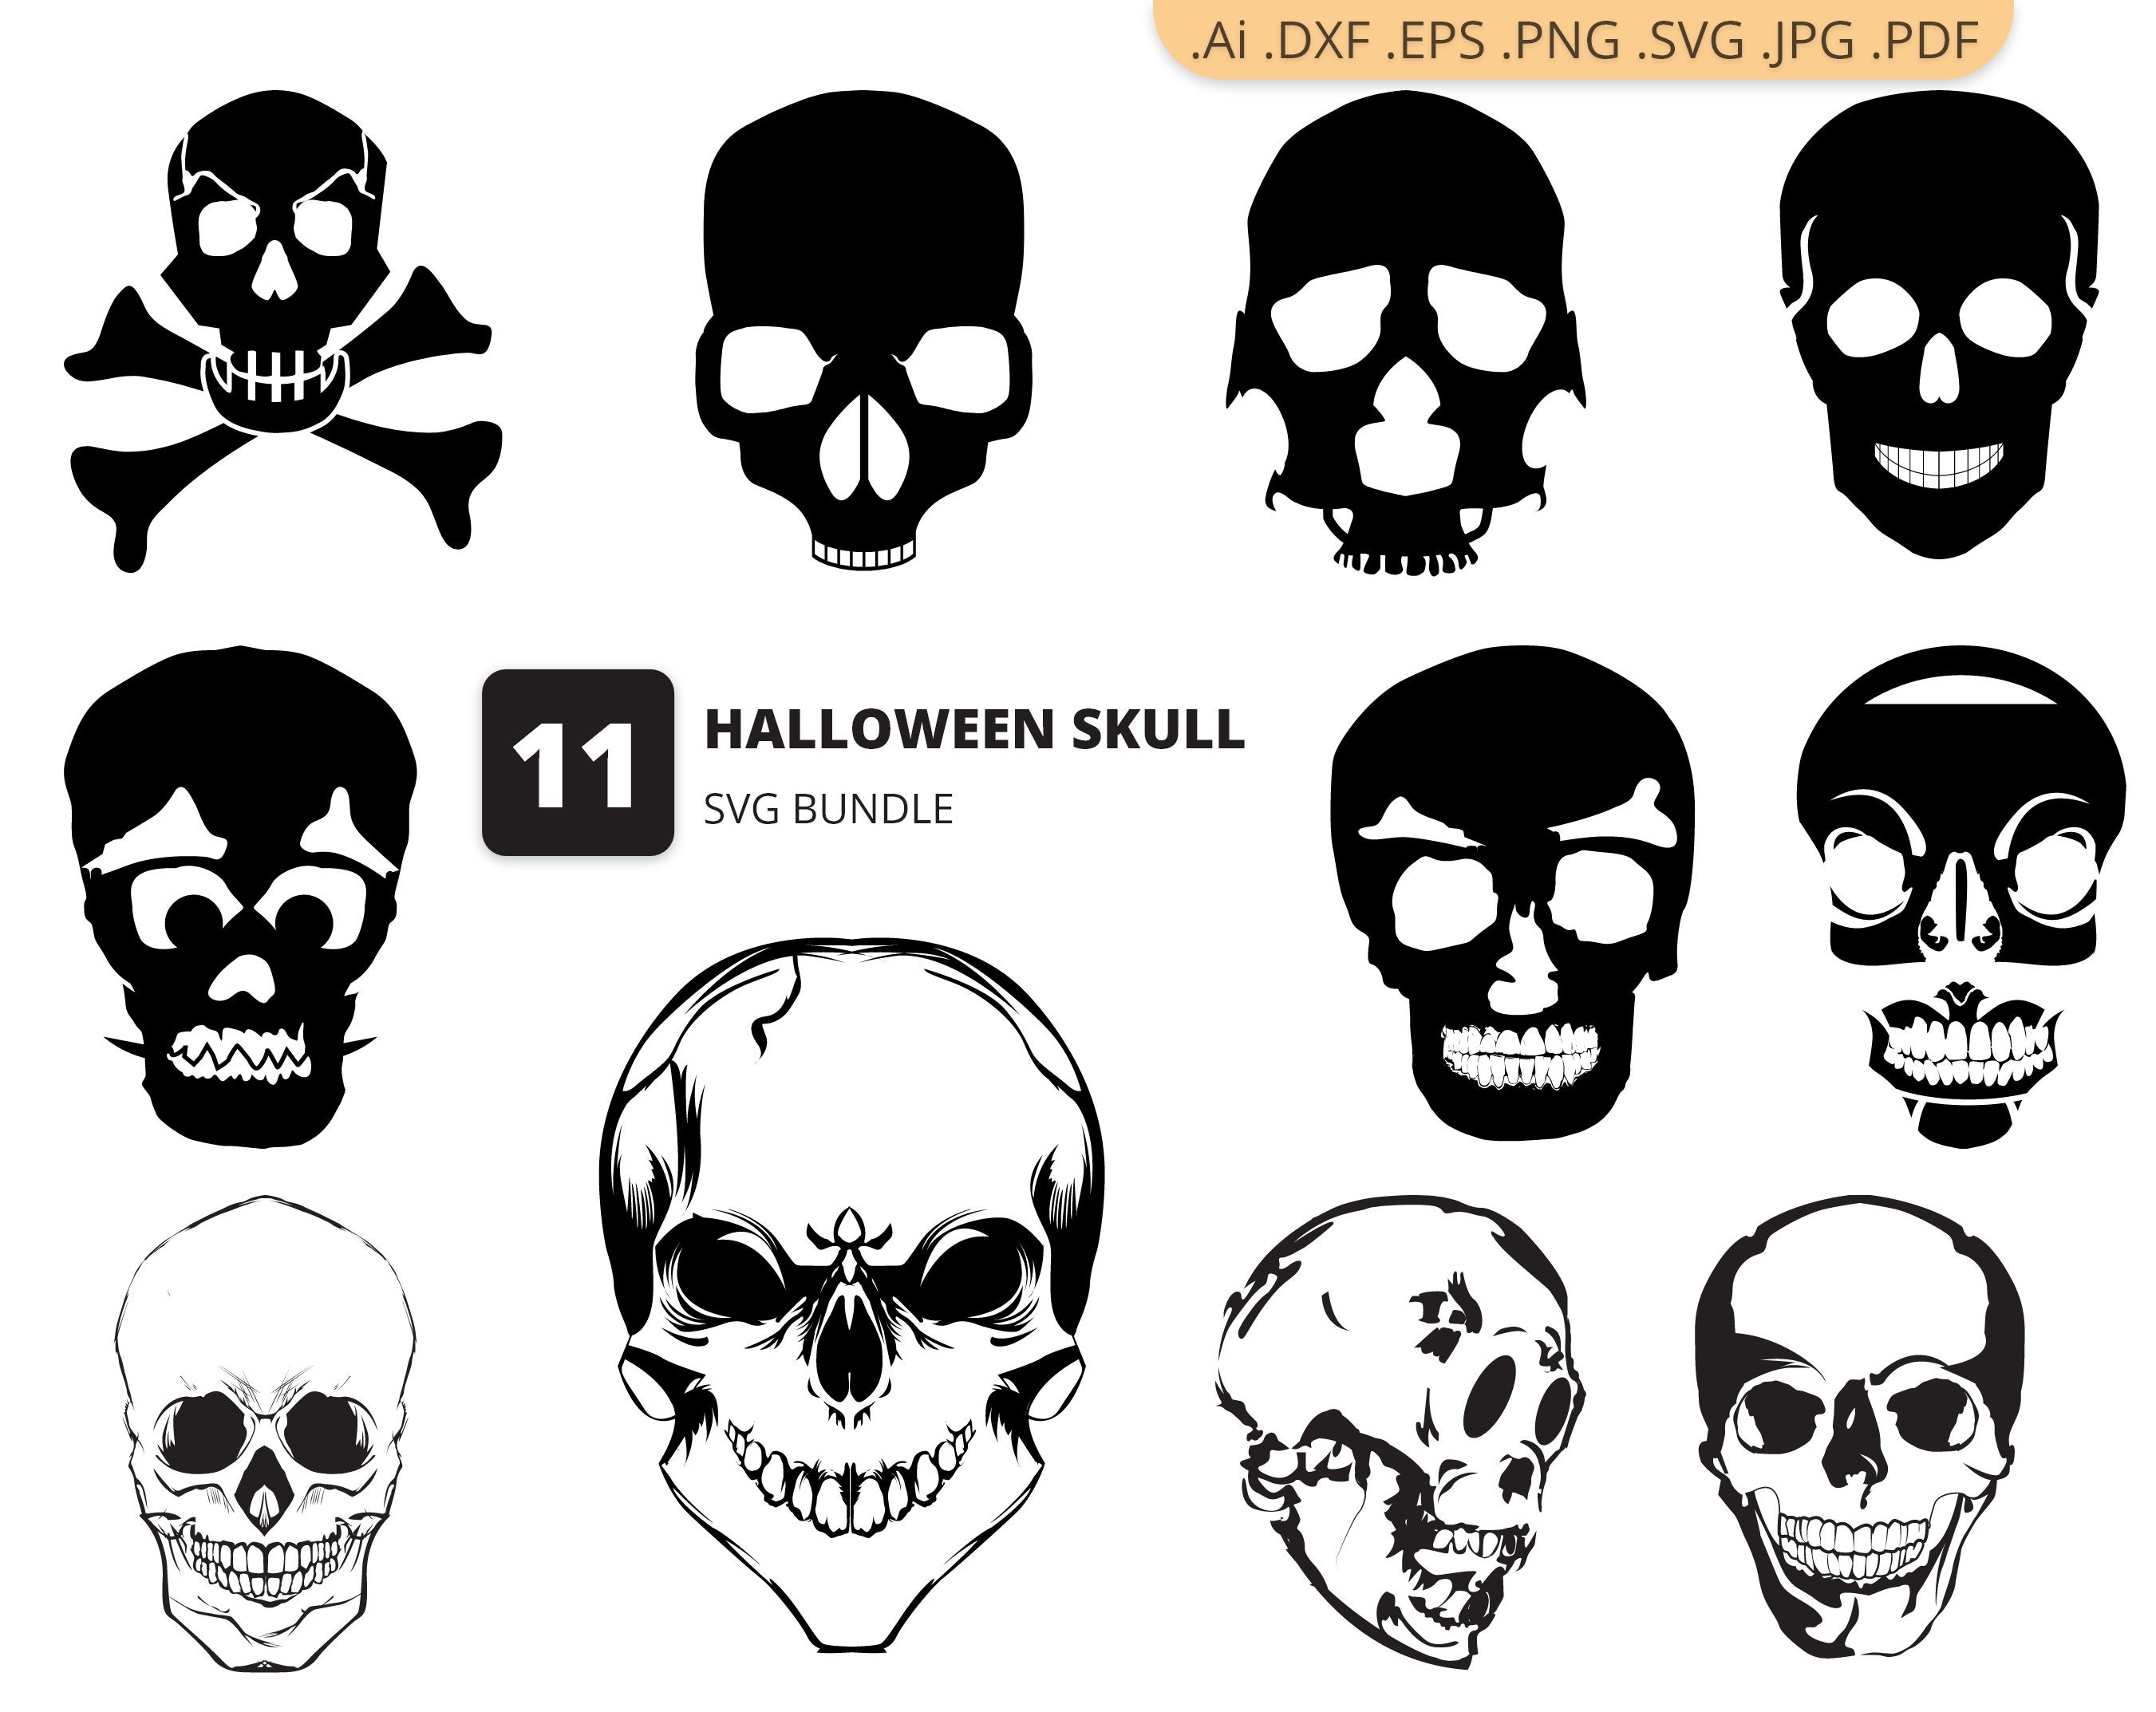 Halloween Skull SVG Halloween Skull Bundle SVG Halloween | Etsy